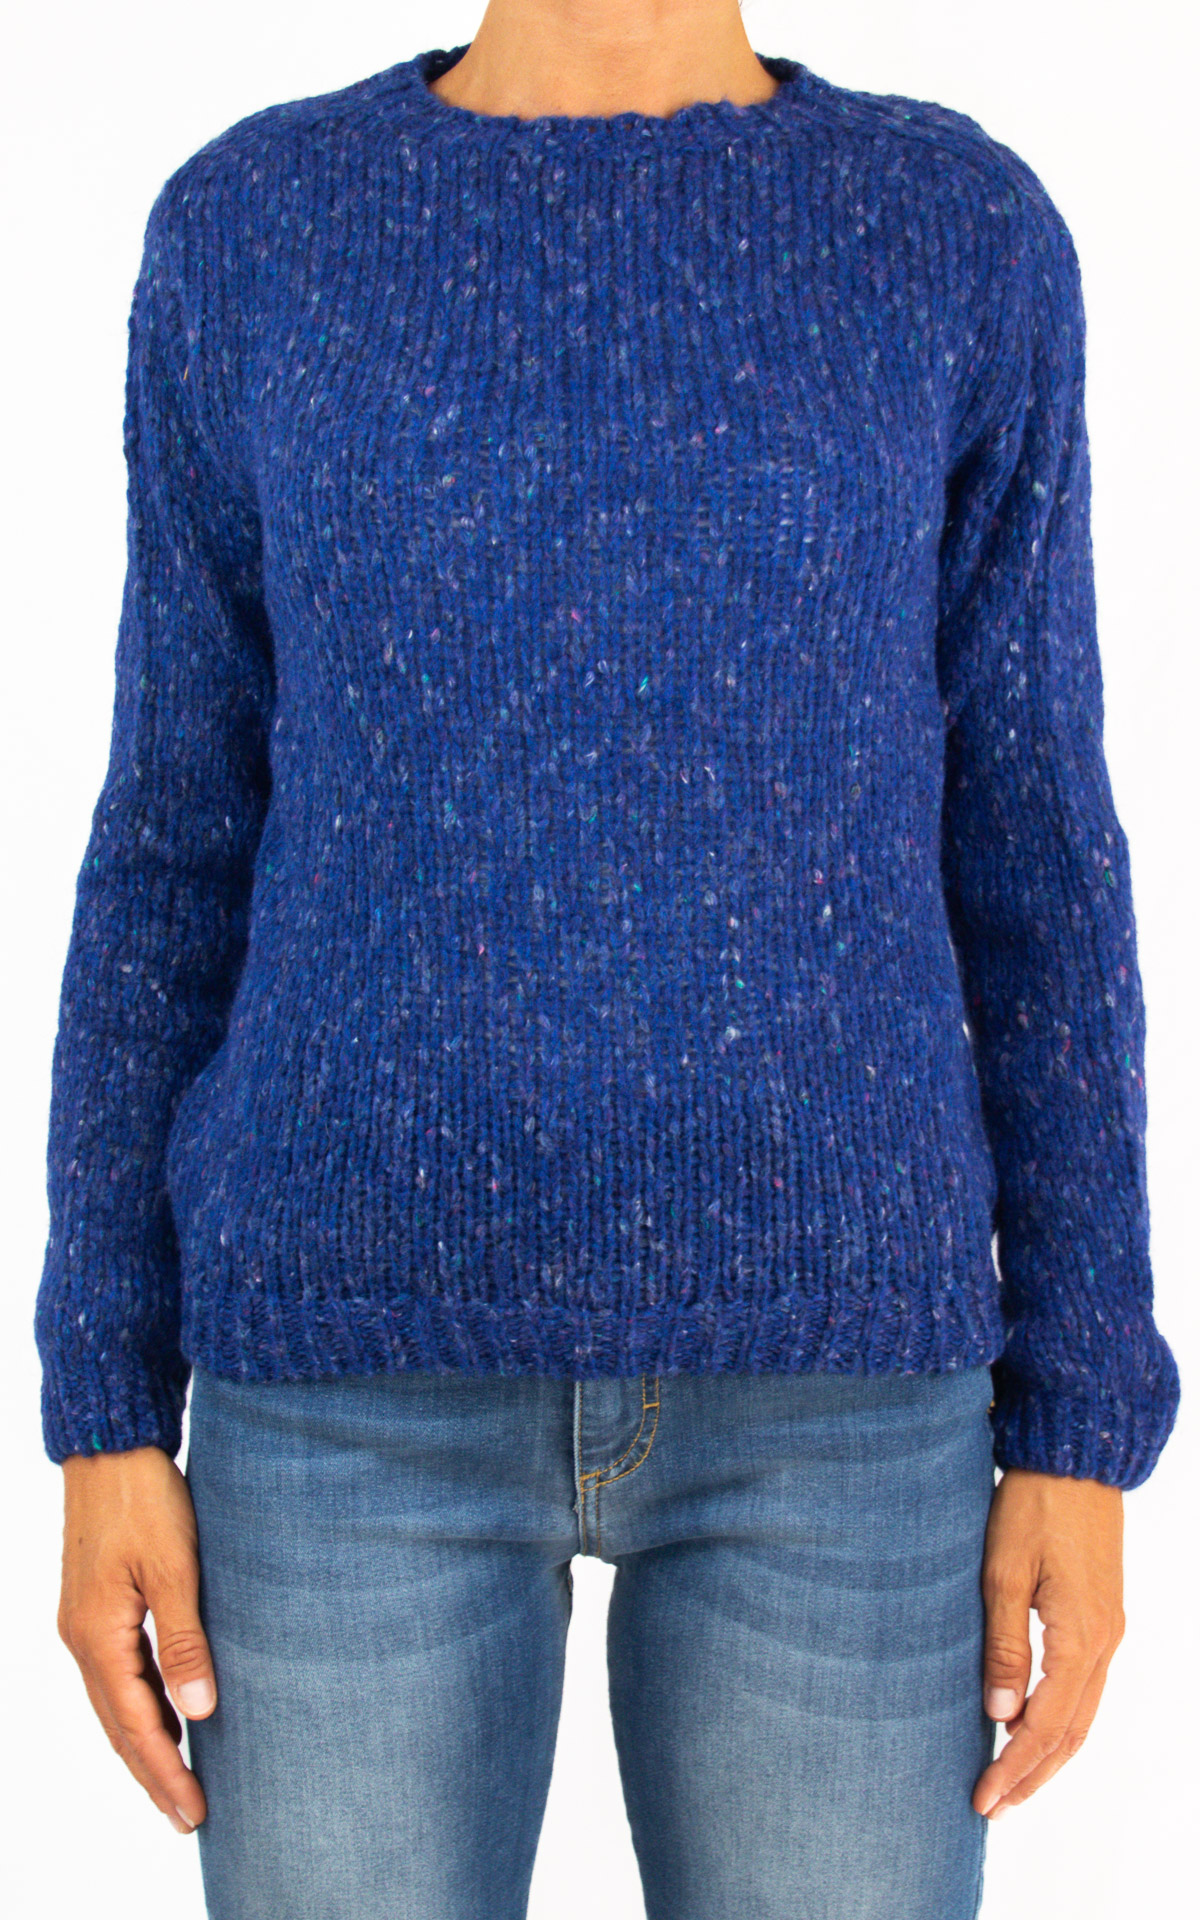 Off-On - maglia in lana - blu